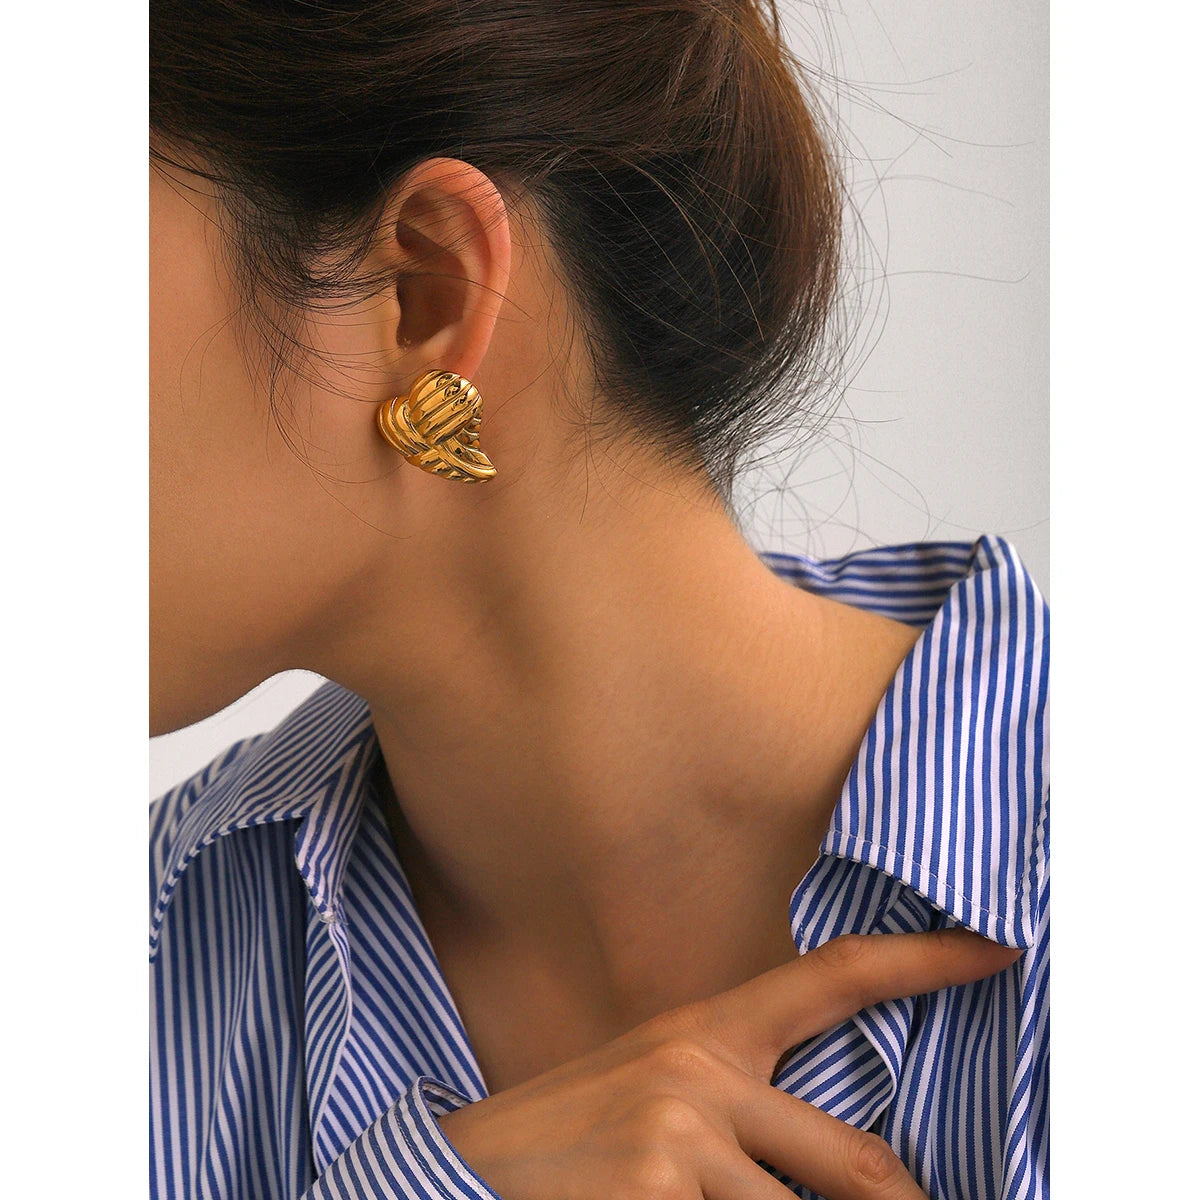 Vintage Style Heart Shape Stud Earrings Gold 18k Plated